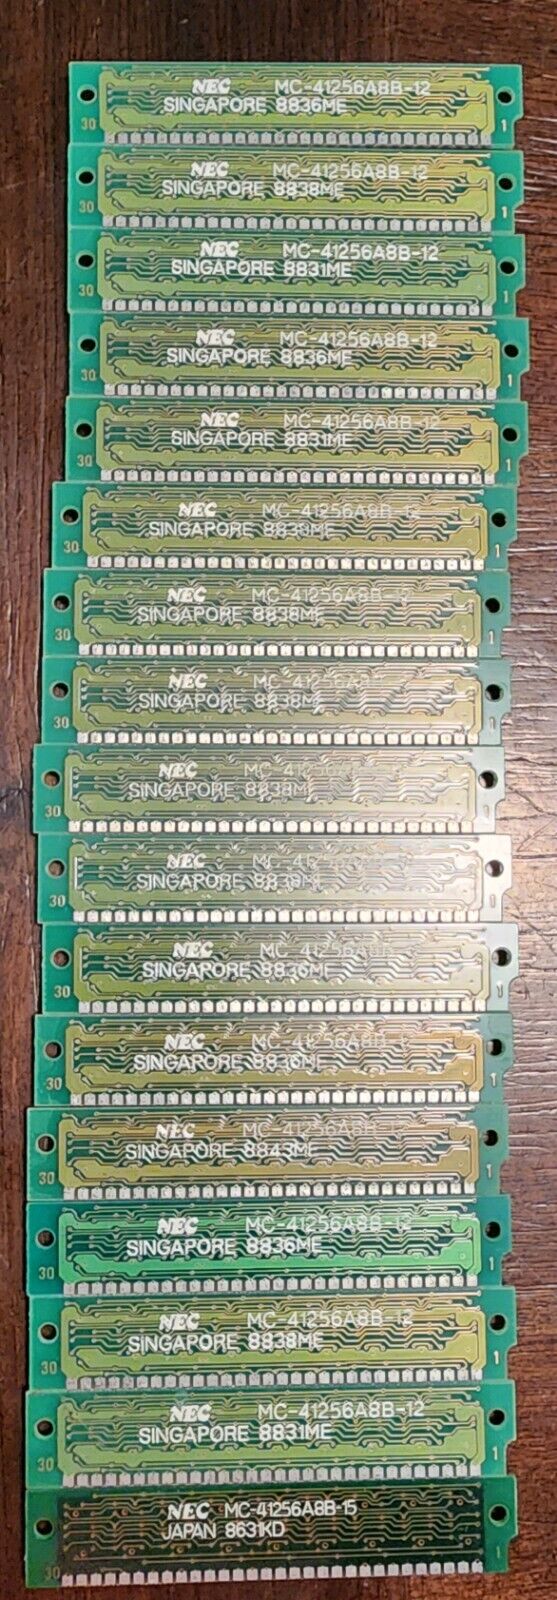 ×17 NEC MC-41256A8b-15 256kb 30-pin 100ns FPM Dram SIMM Module